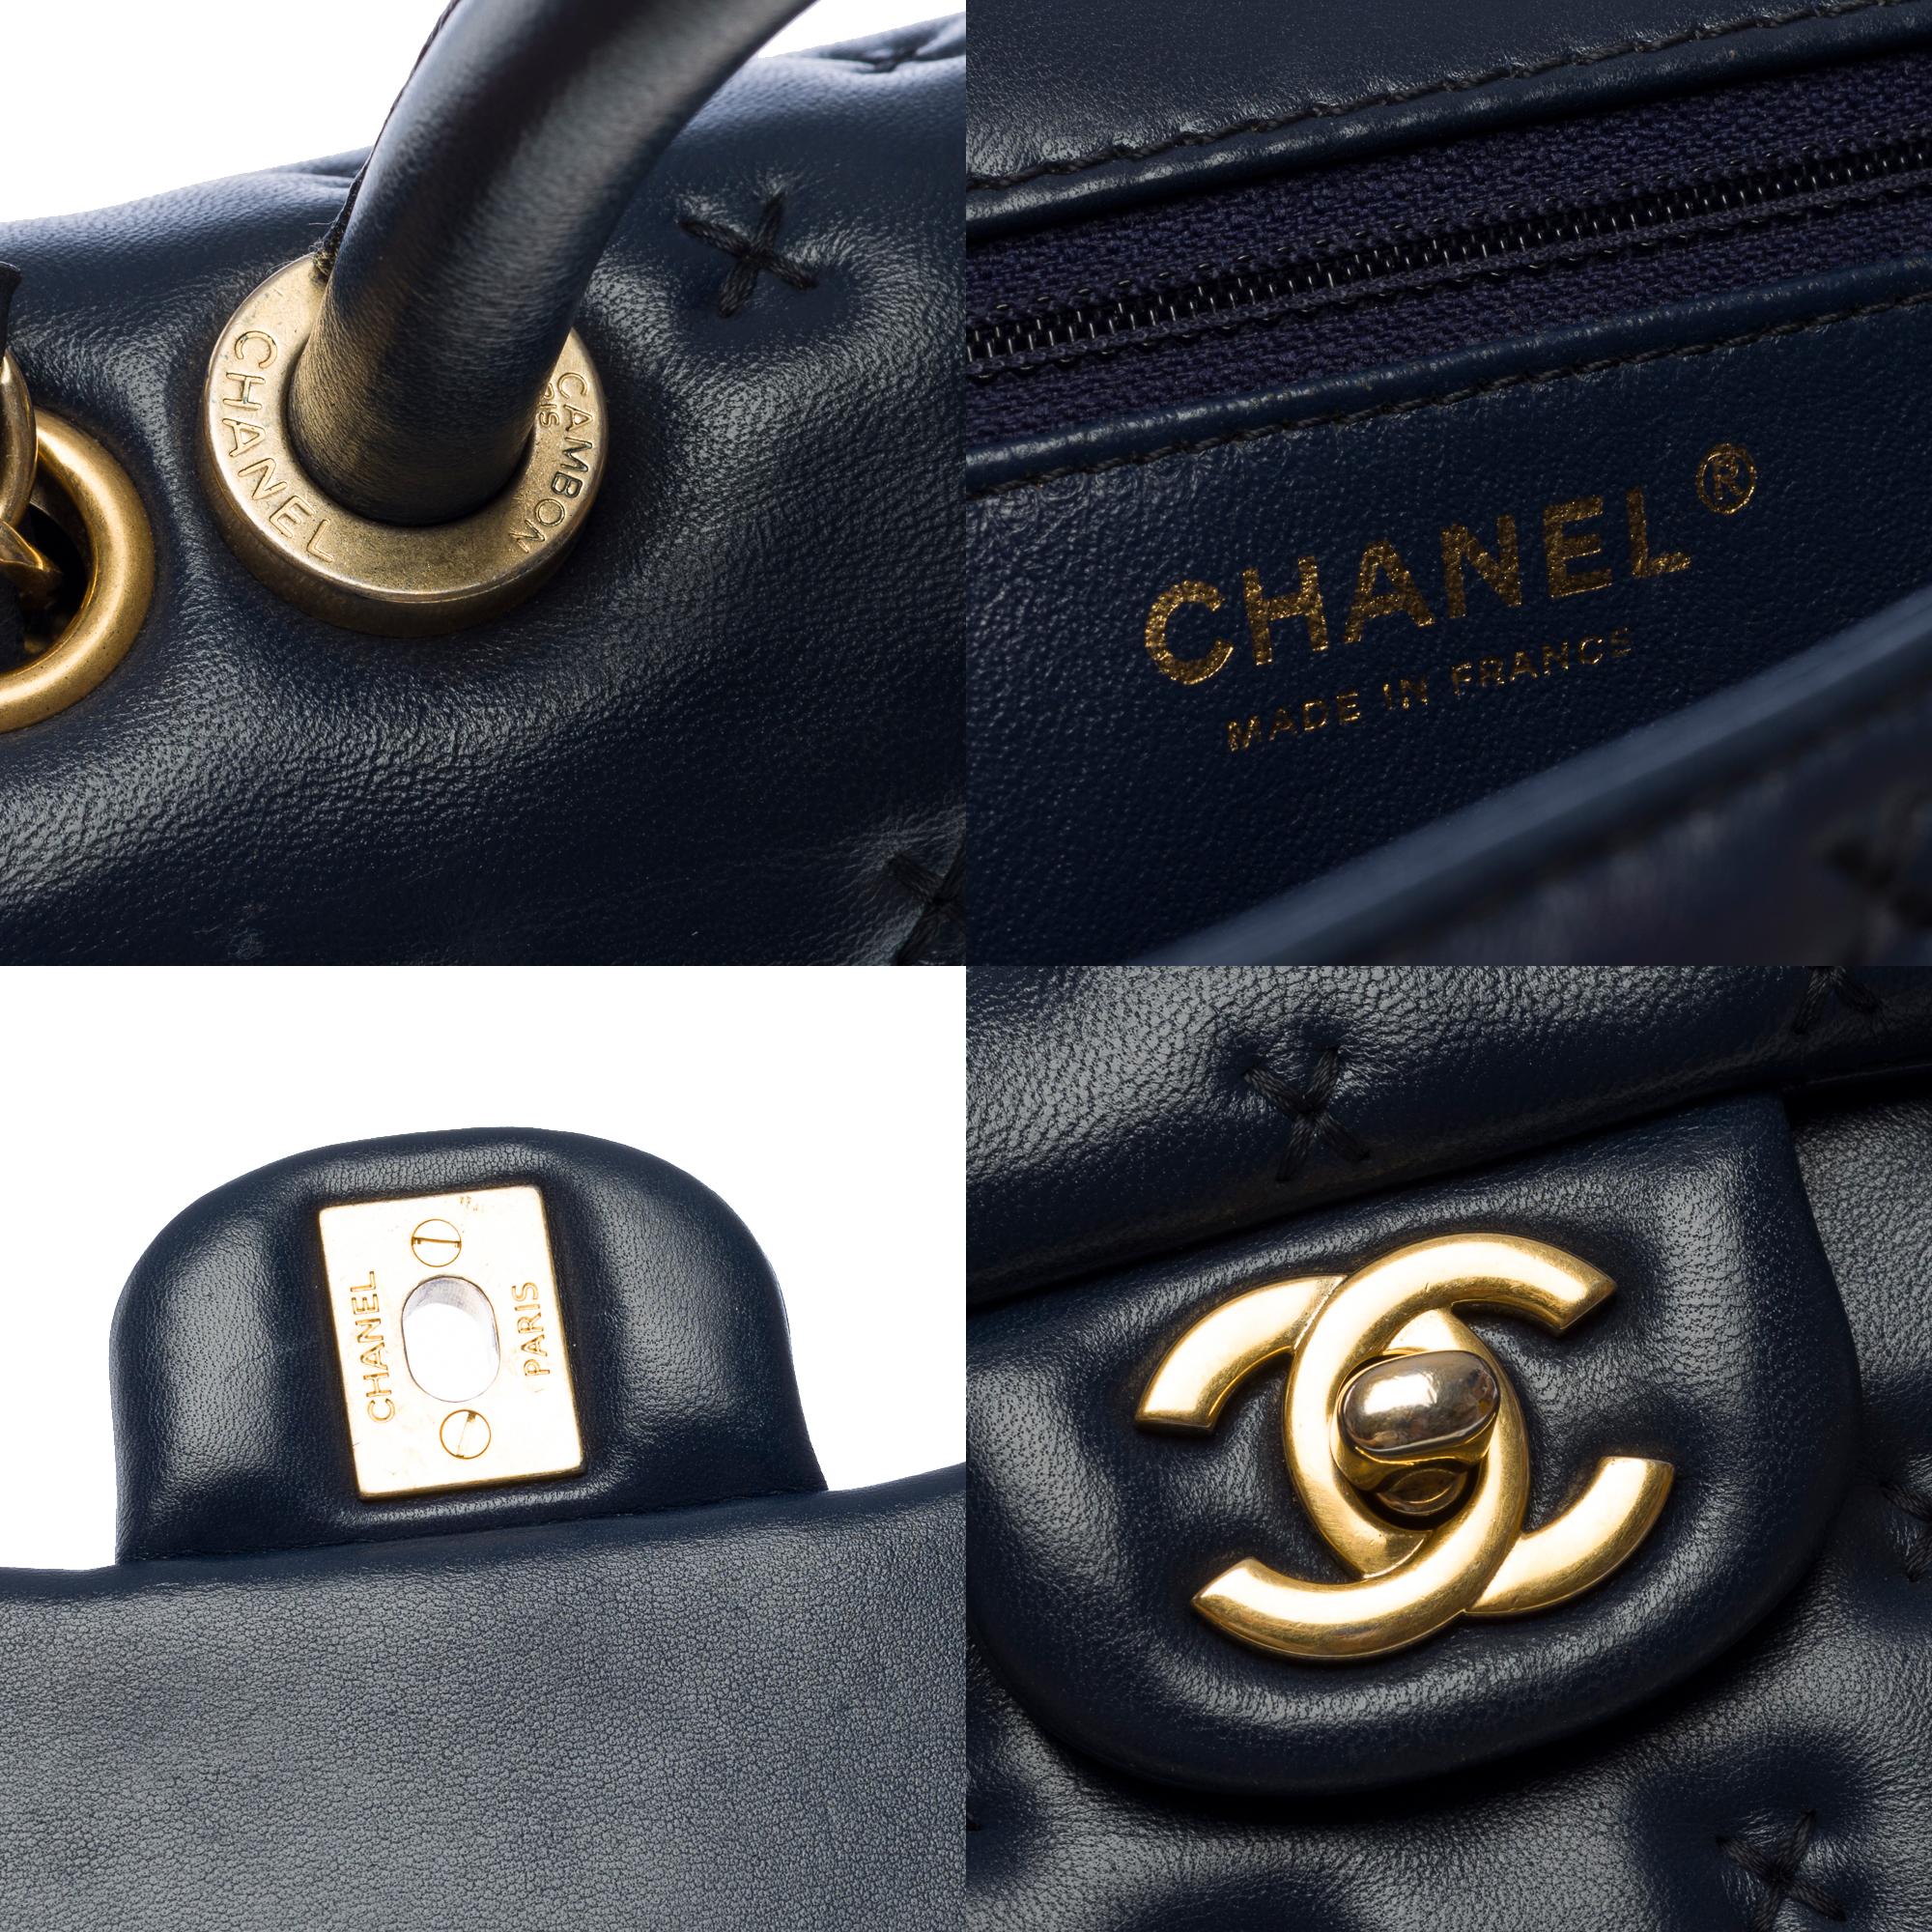 FW2016 Paris-Rome- Chanel Coco handle handbag in Navy blue lambskin leather, GHW 1